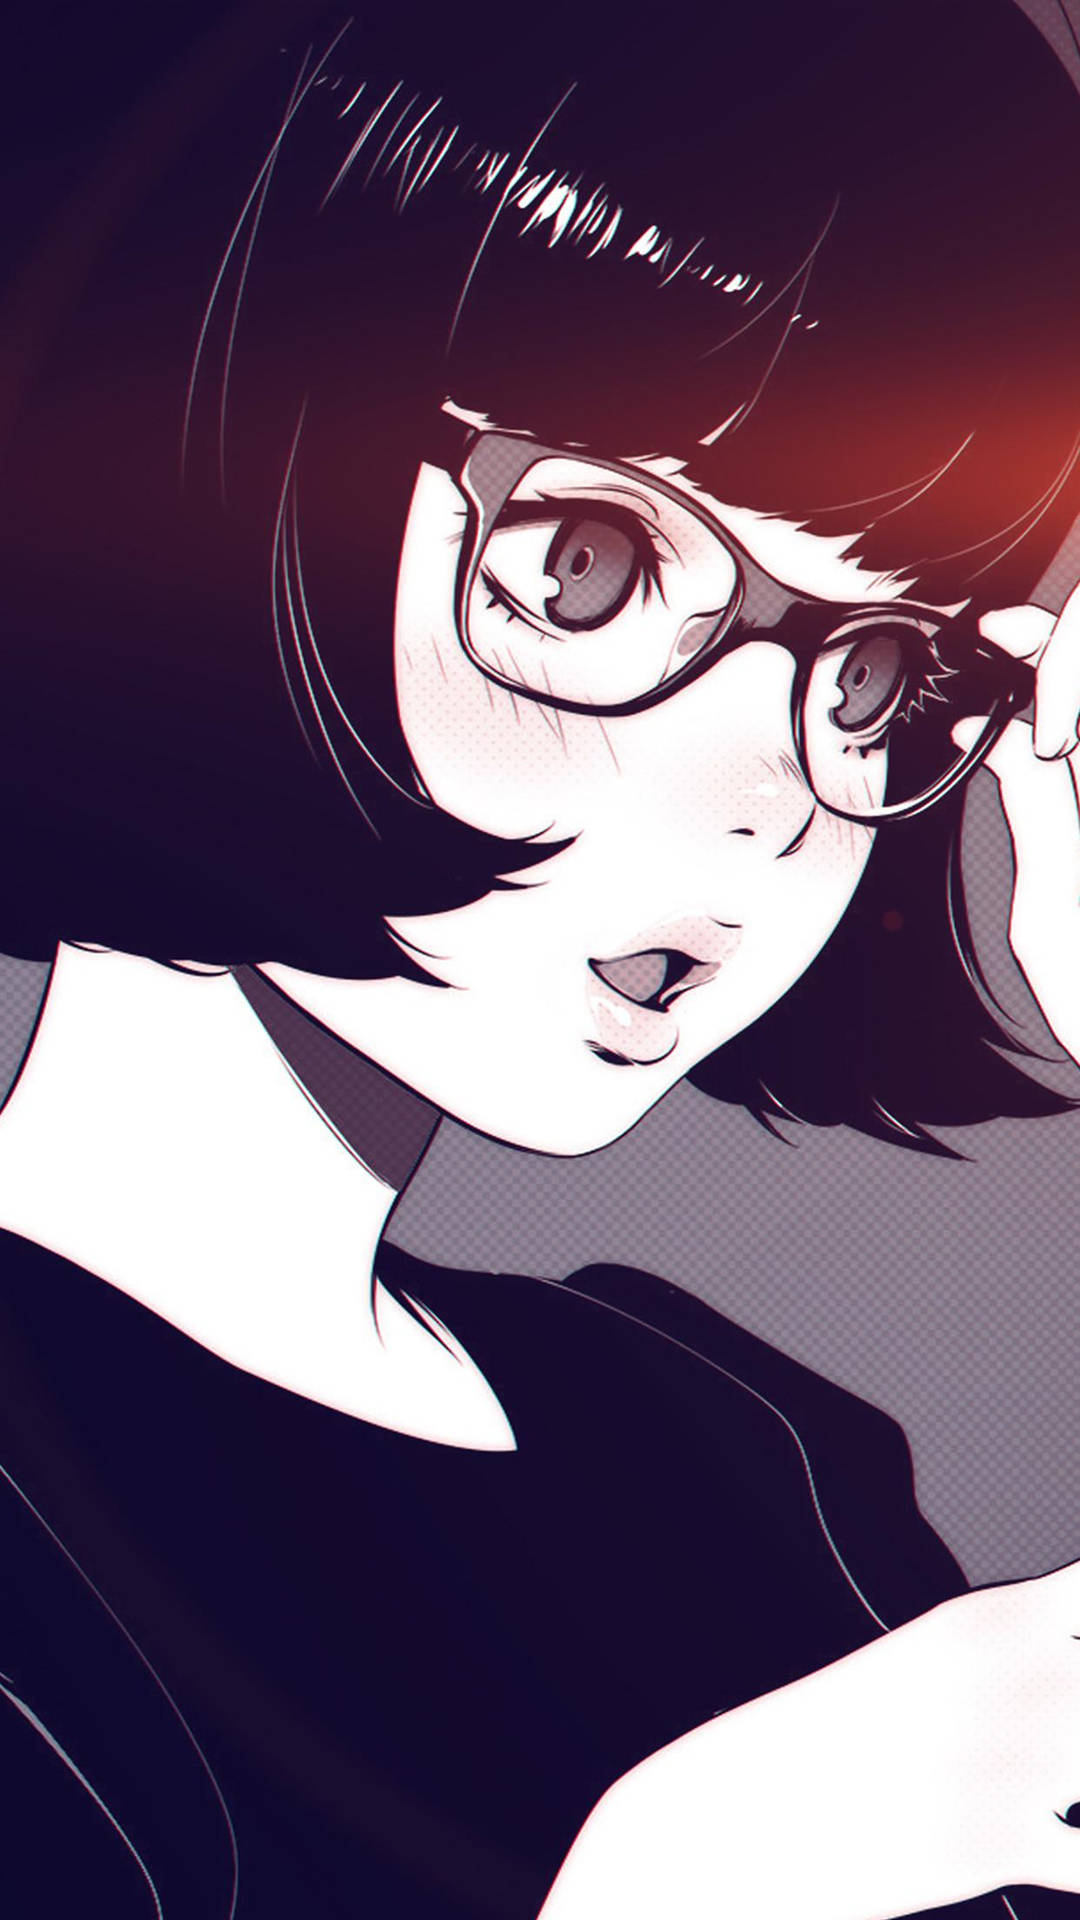 Aesthetic Anime Girl With Eyeglasses Background